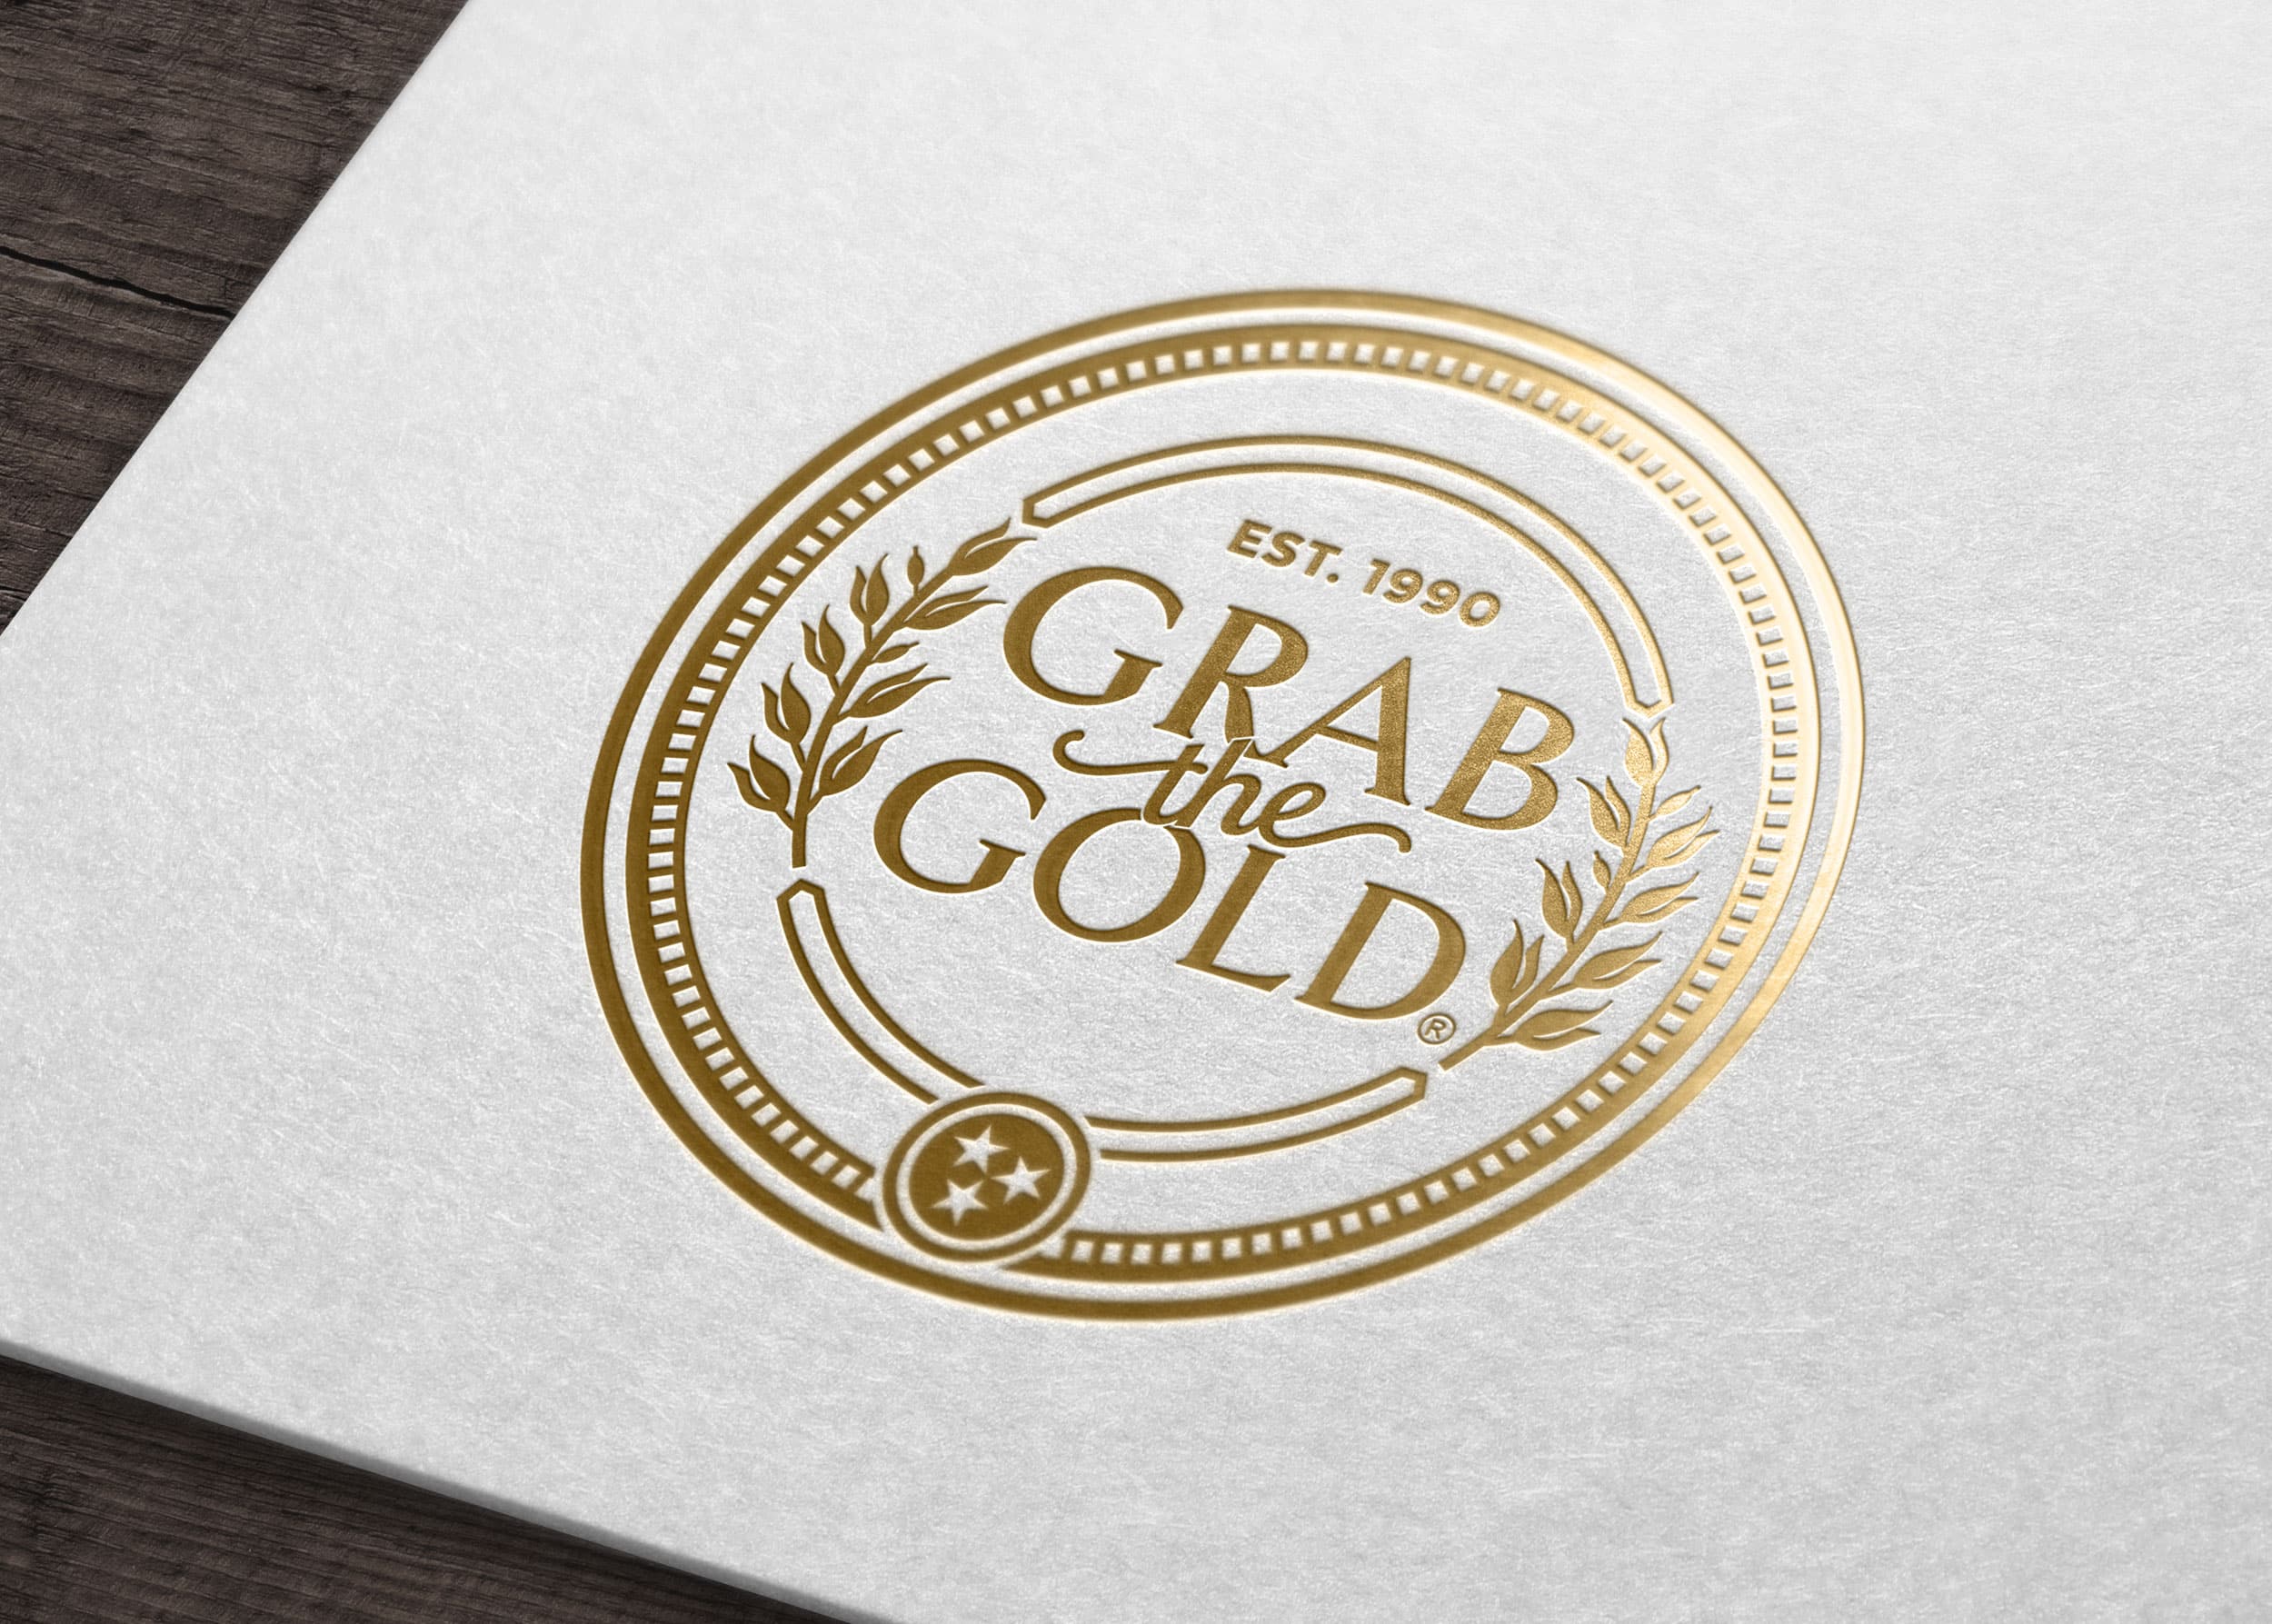 Giant Creative Commerce Grab The Gold Letterpress